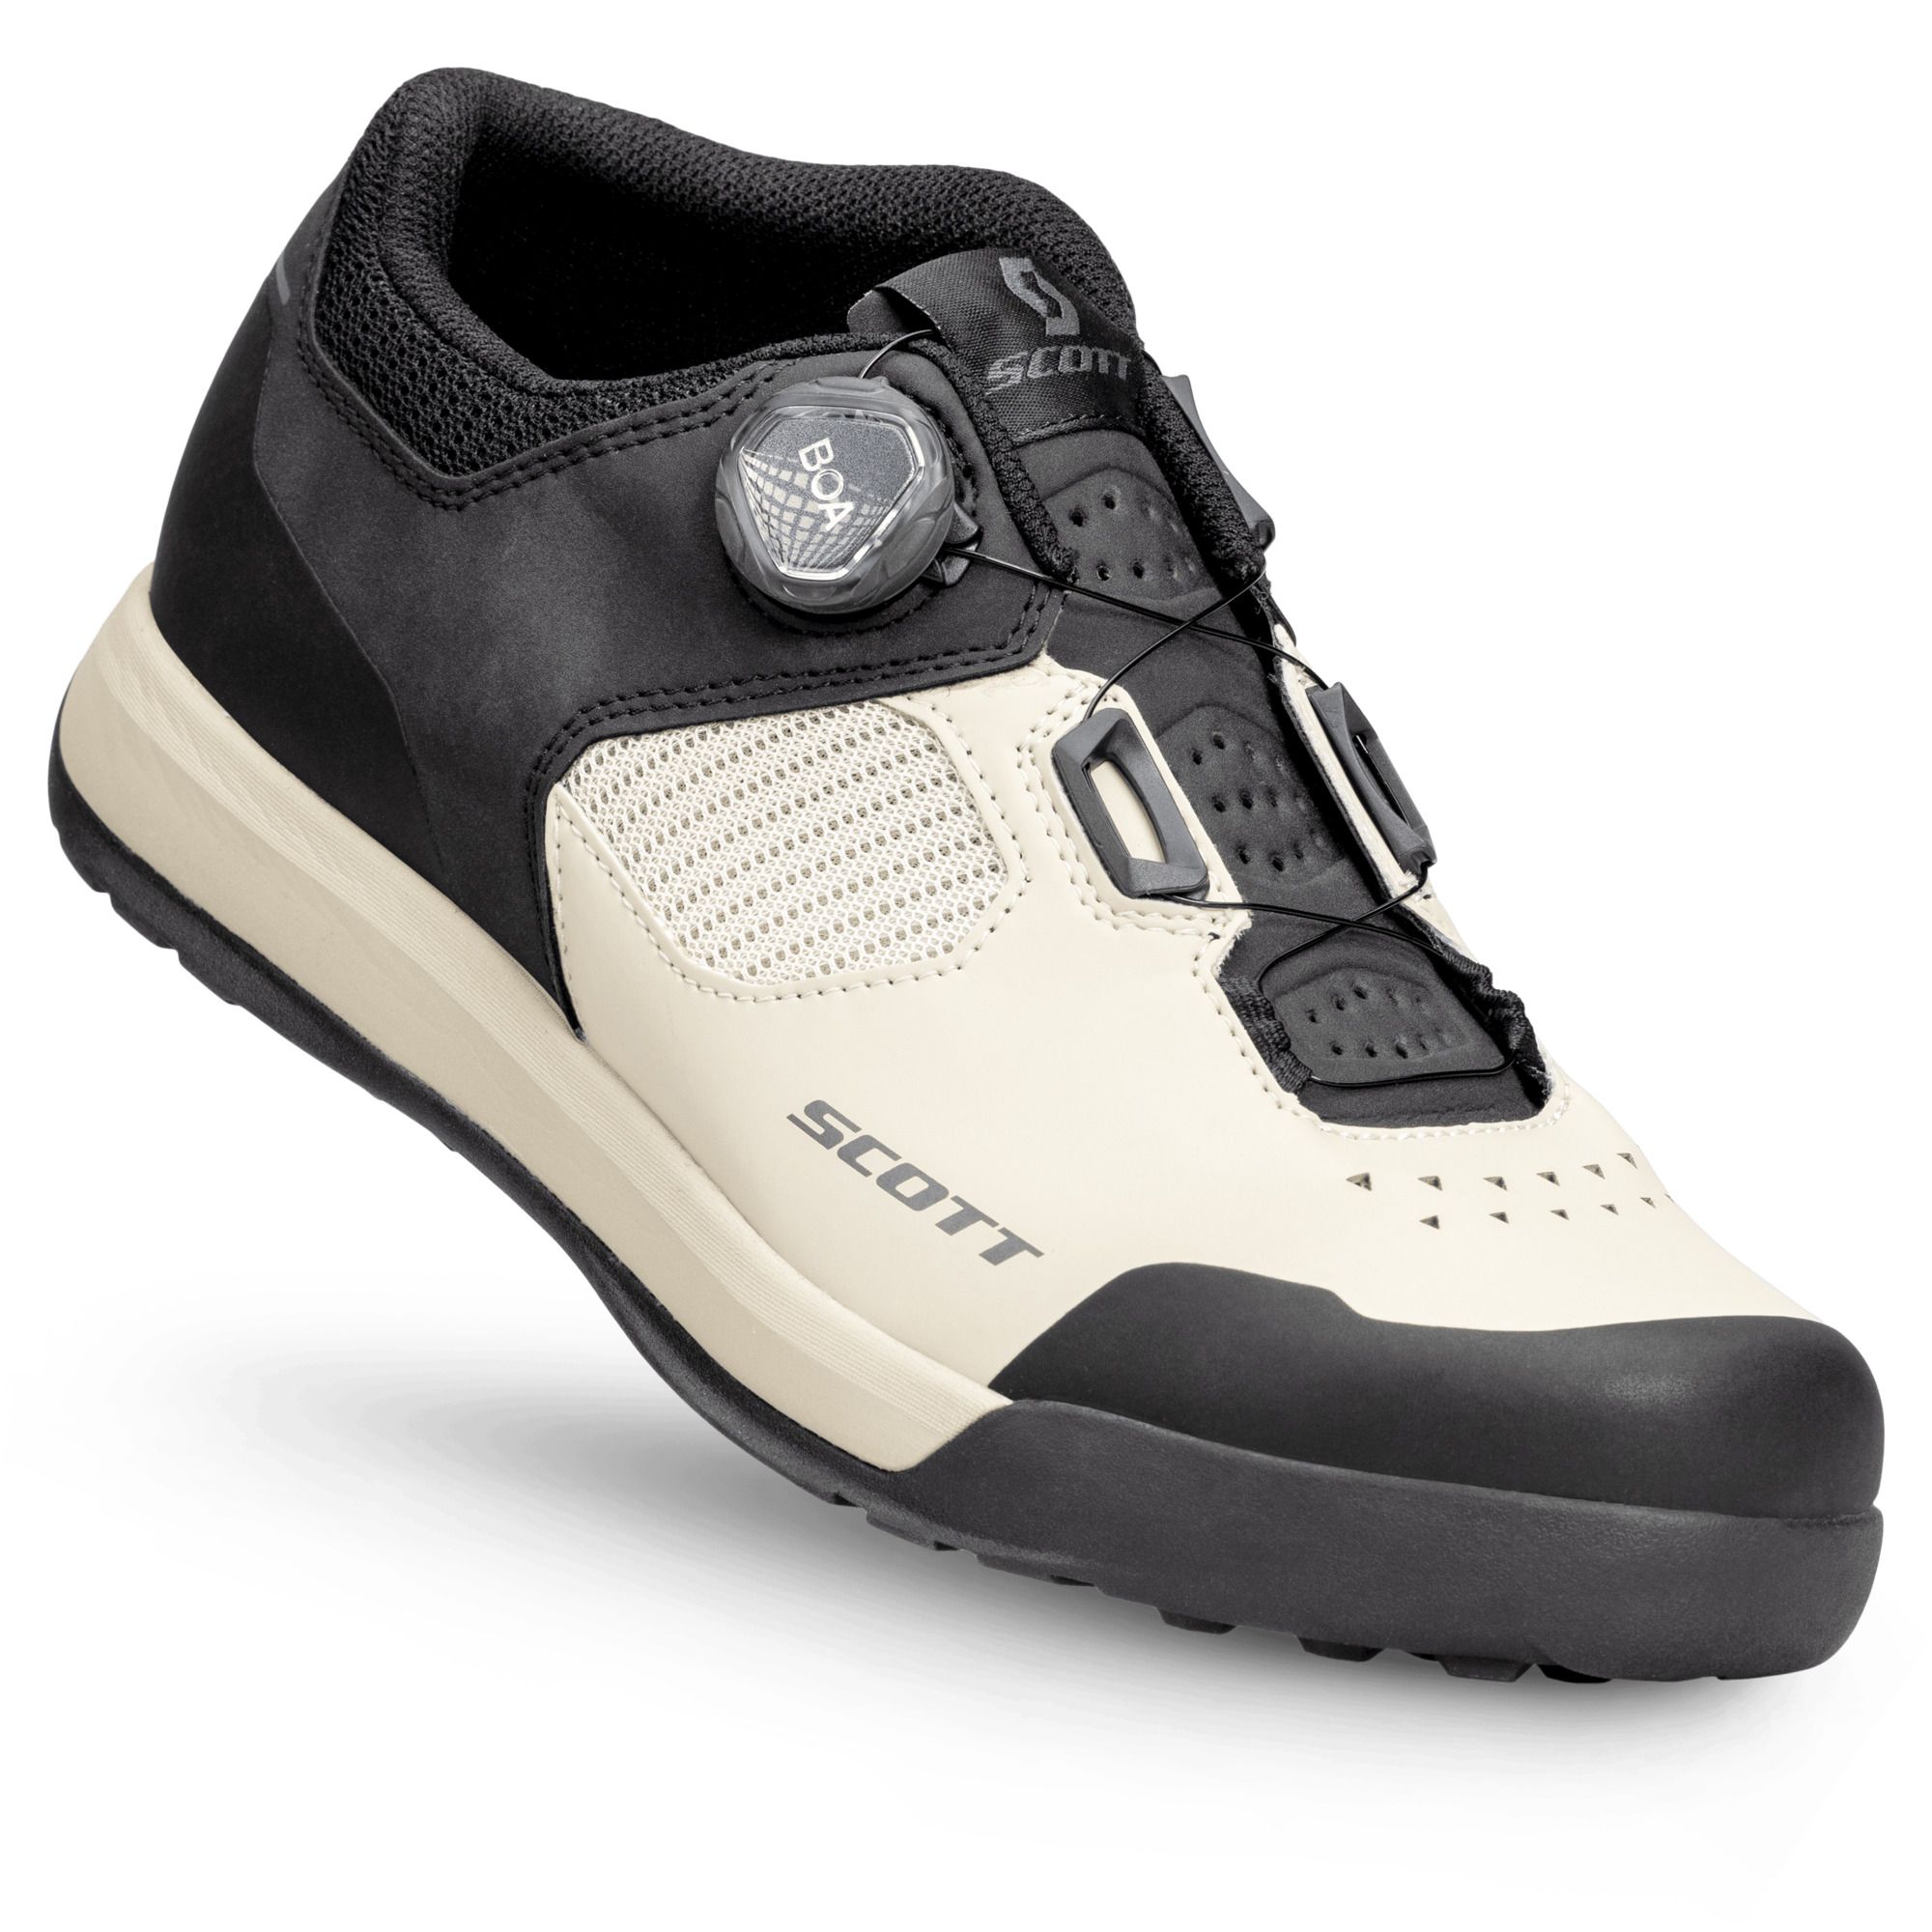 Produktbild von SCOTT MTB Shr-alp Boa EVO Schuhe Herren - schwarz/beige